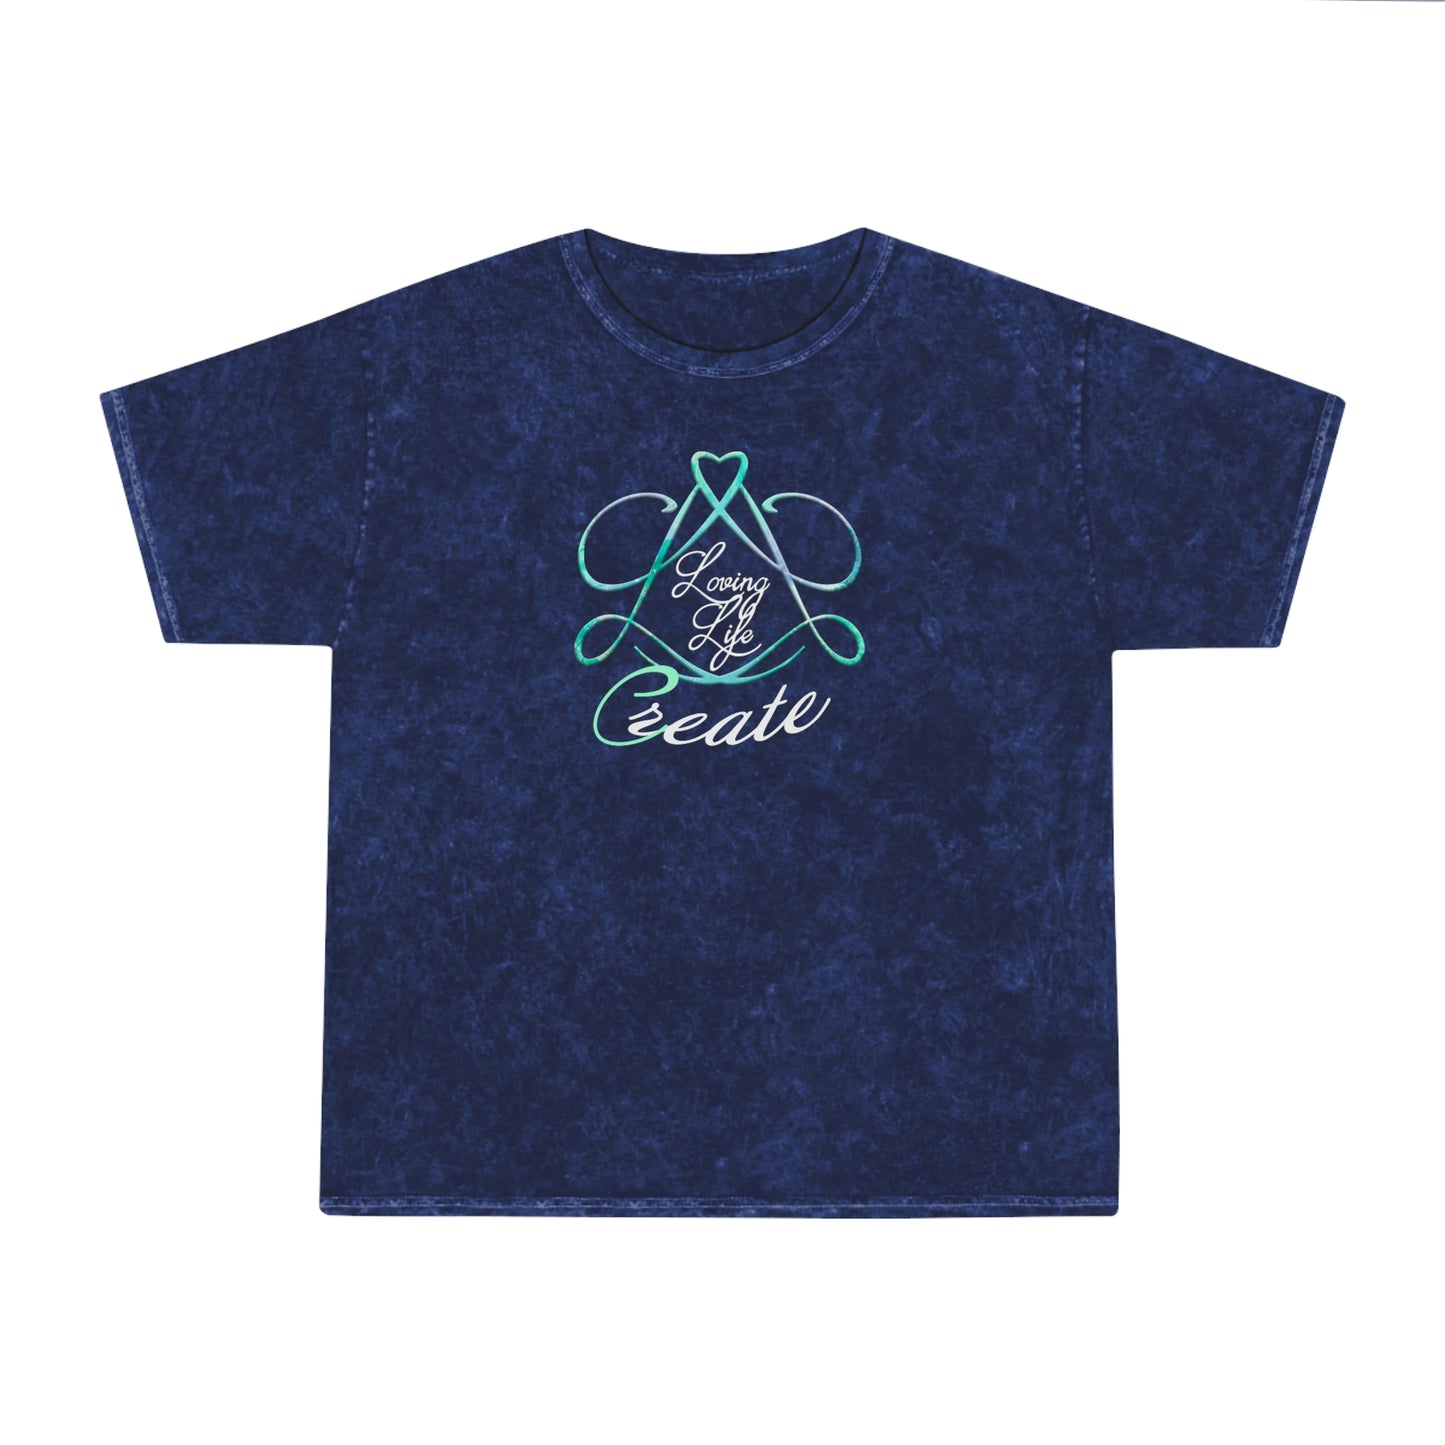 Unisex Mineral Wash T-Shirt - LL/Create